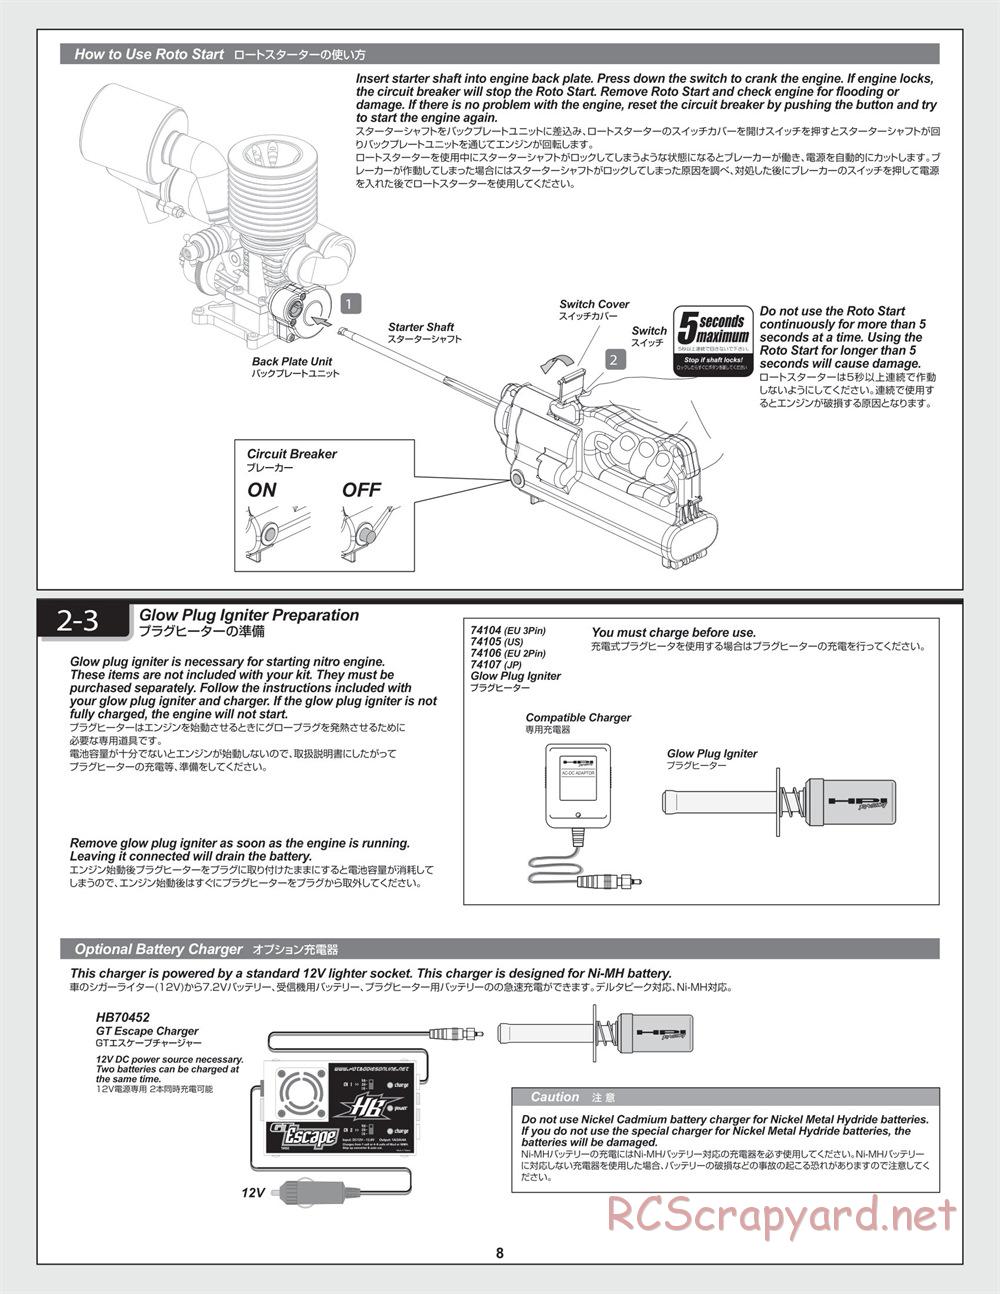 HPI - Savage-X 4.6 - Manual - Page 8